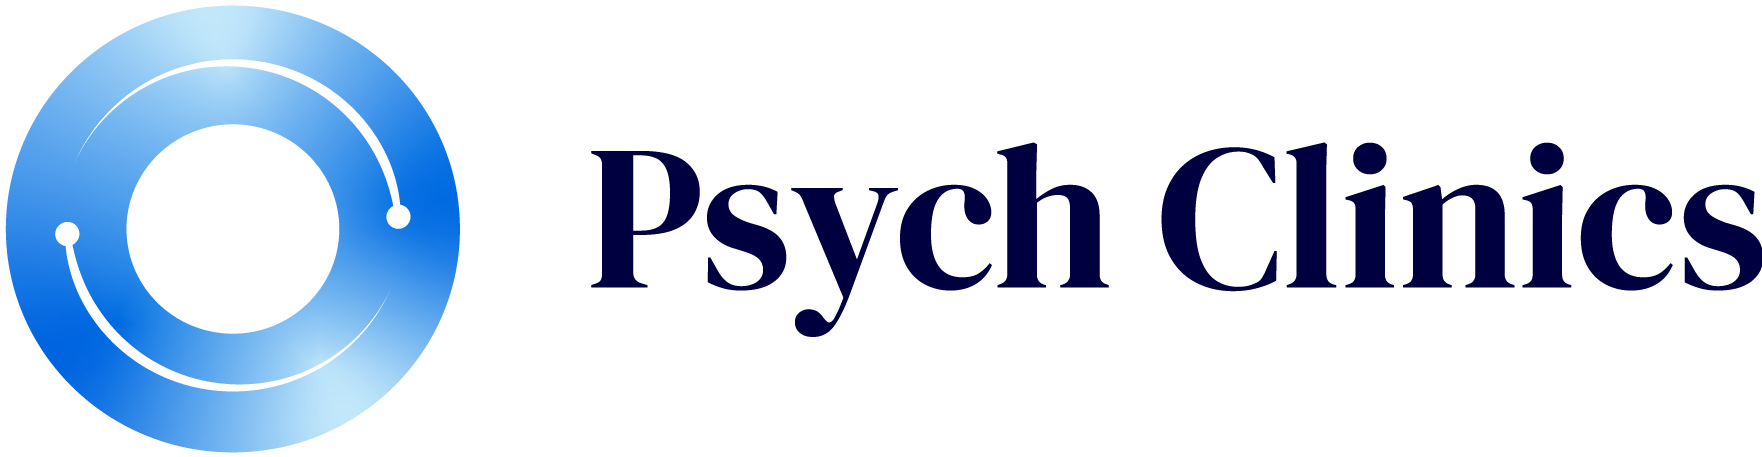 psychclinics